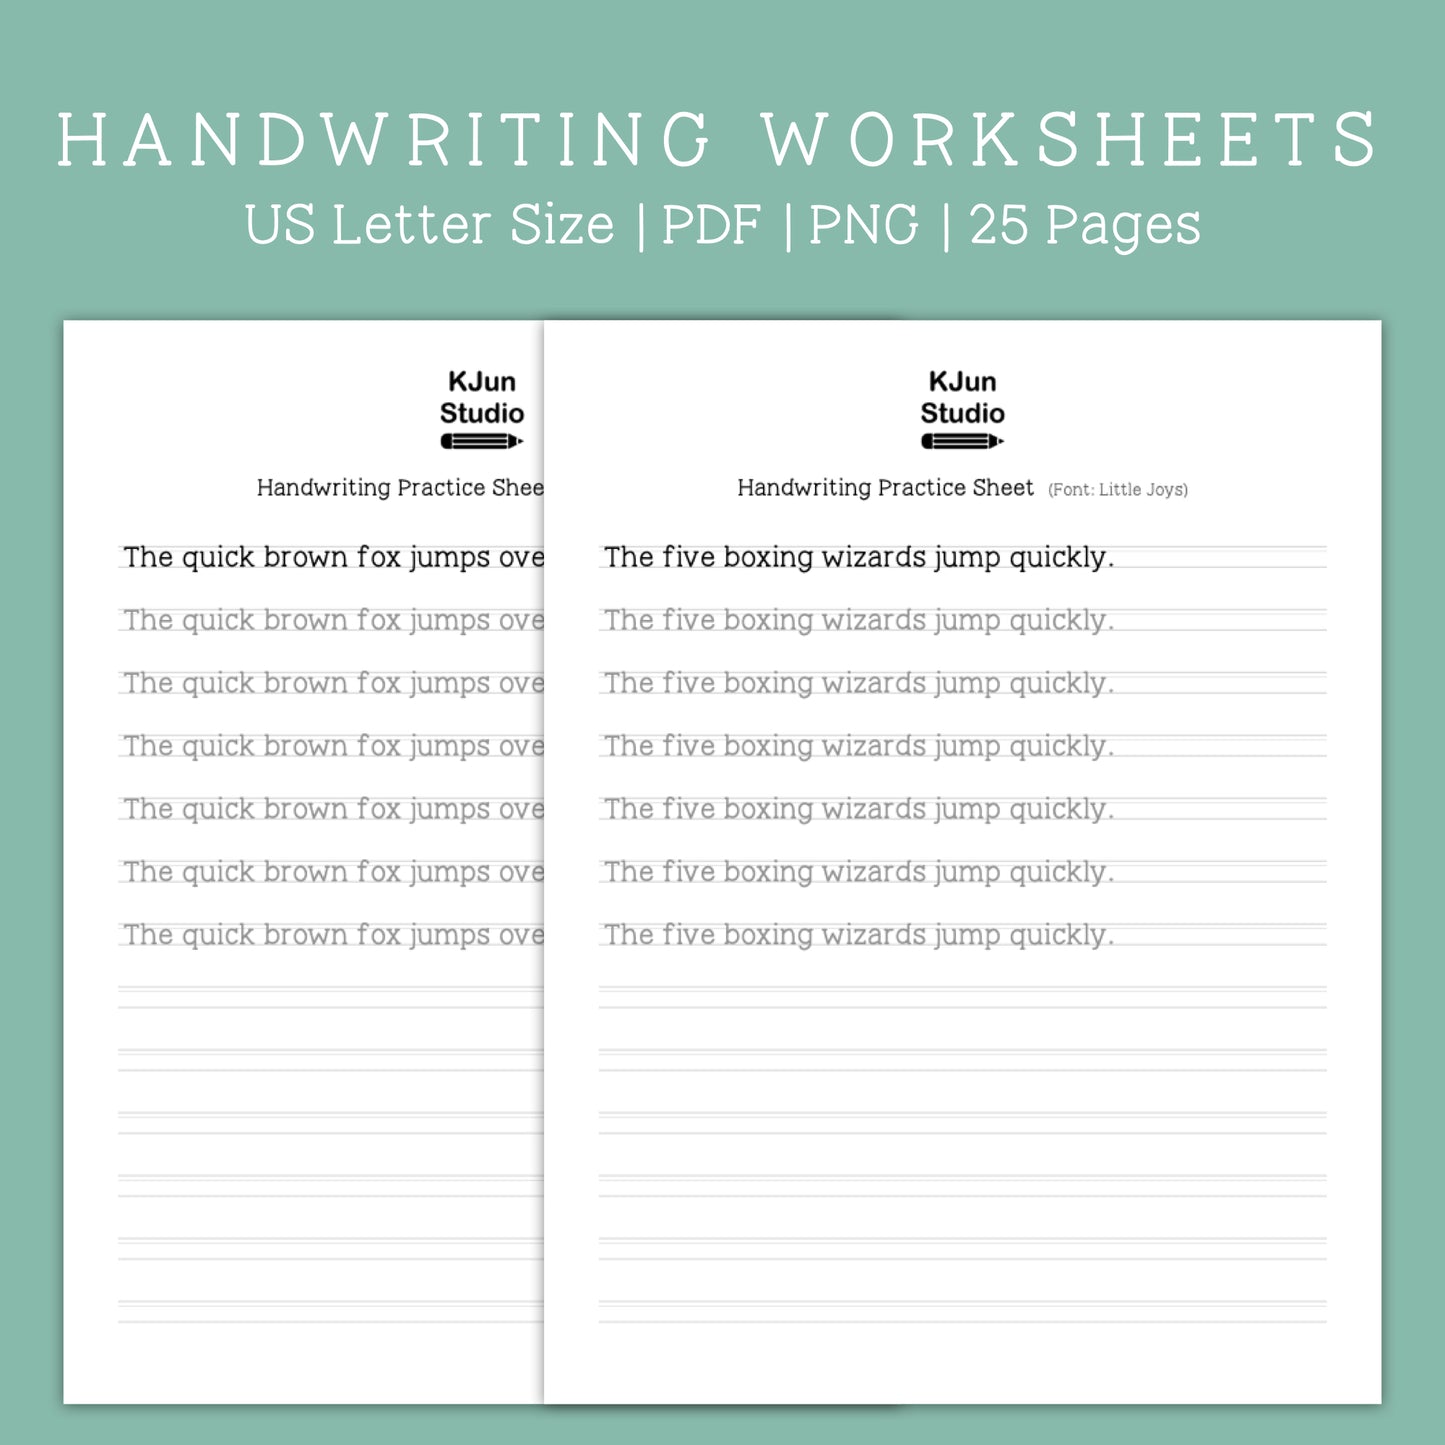 Handwriting Practice Sheets - Little Joys Font